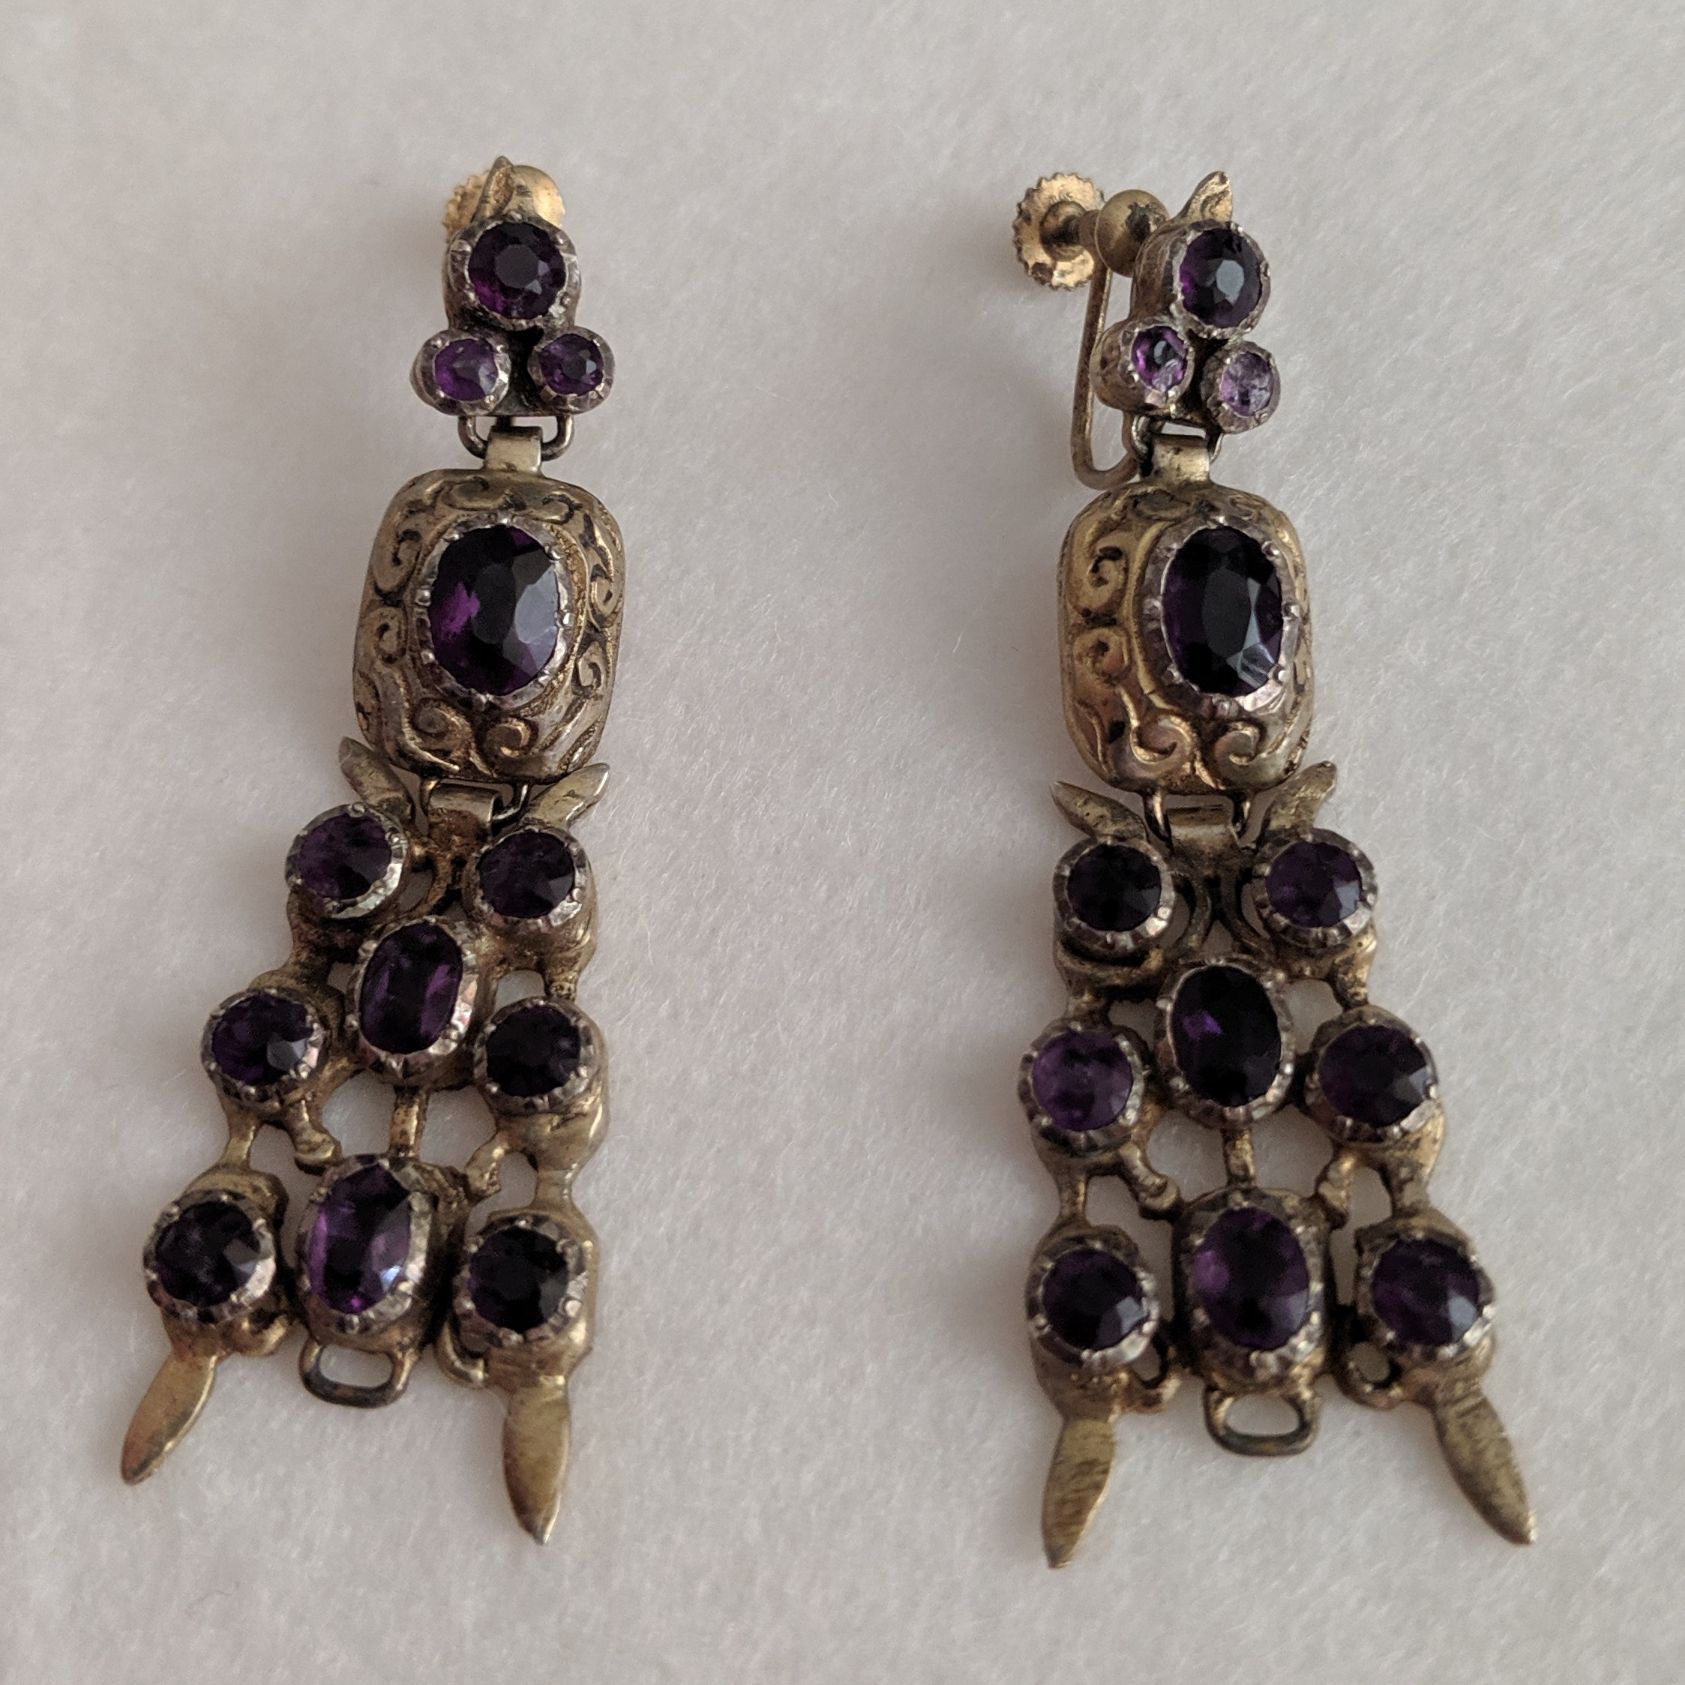 Earrings, Austro Hungrian? | Antiques Board